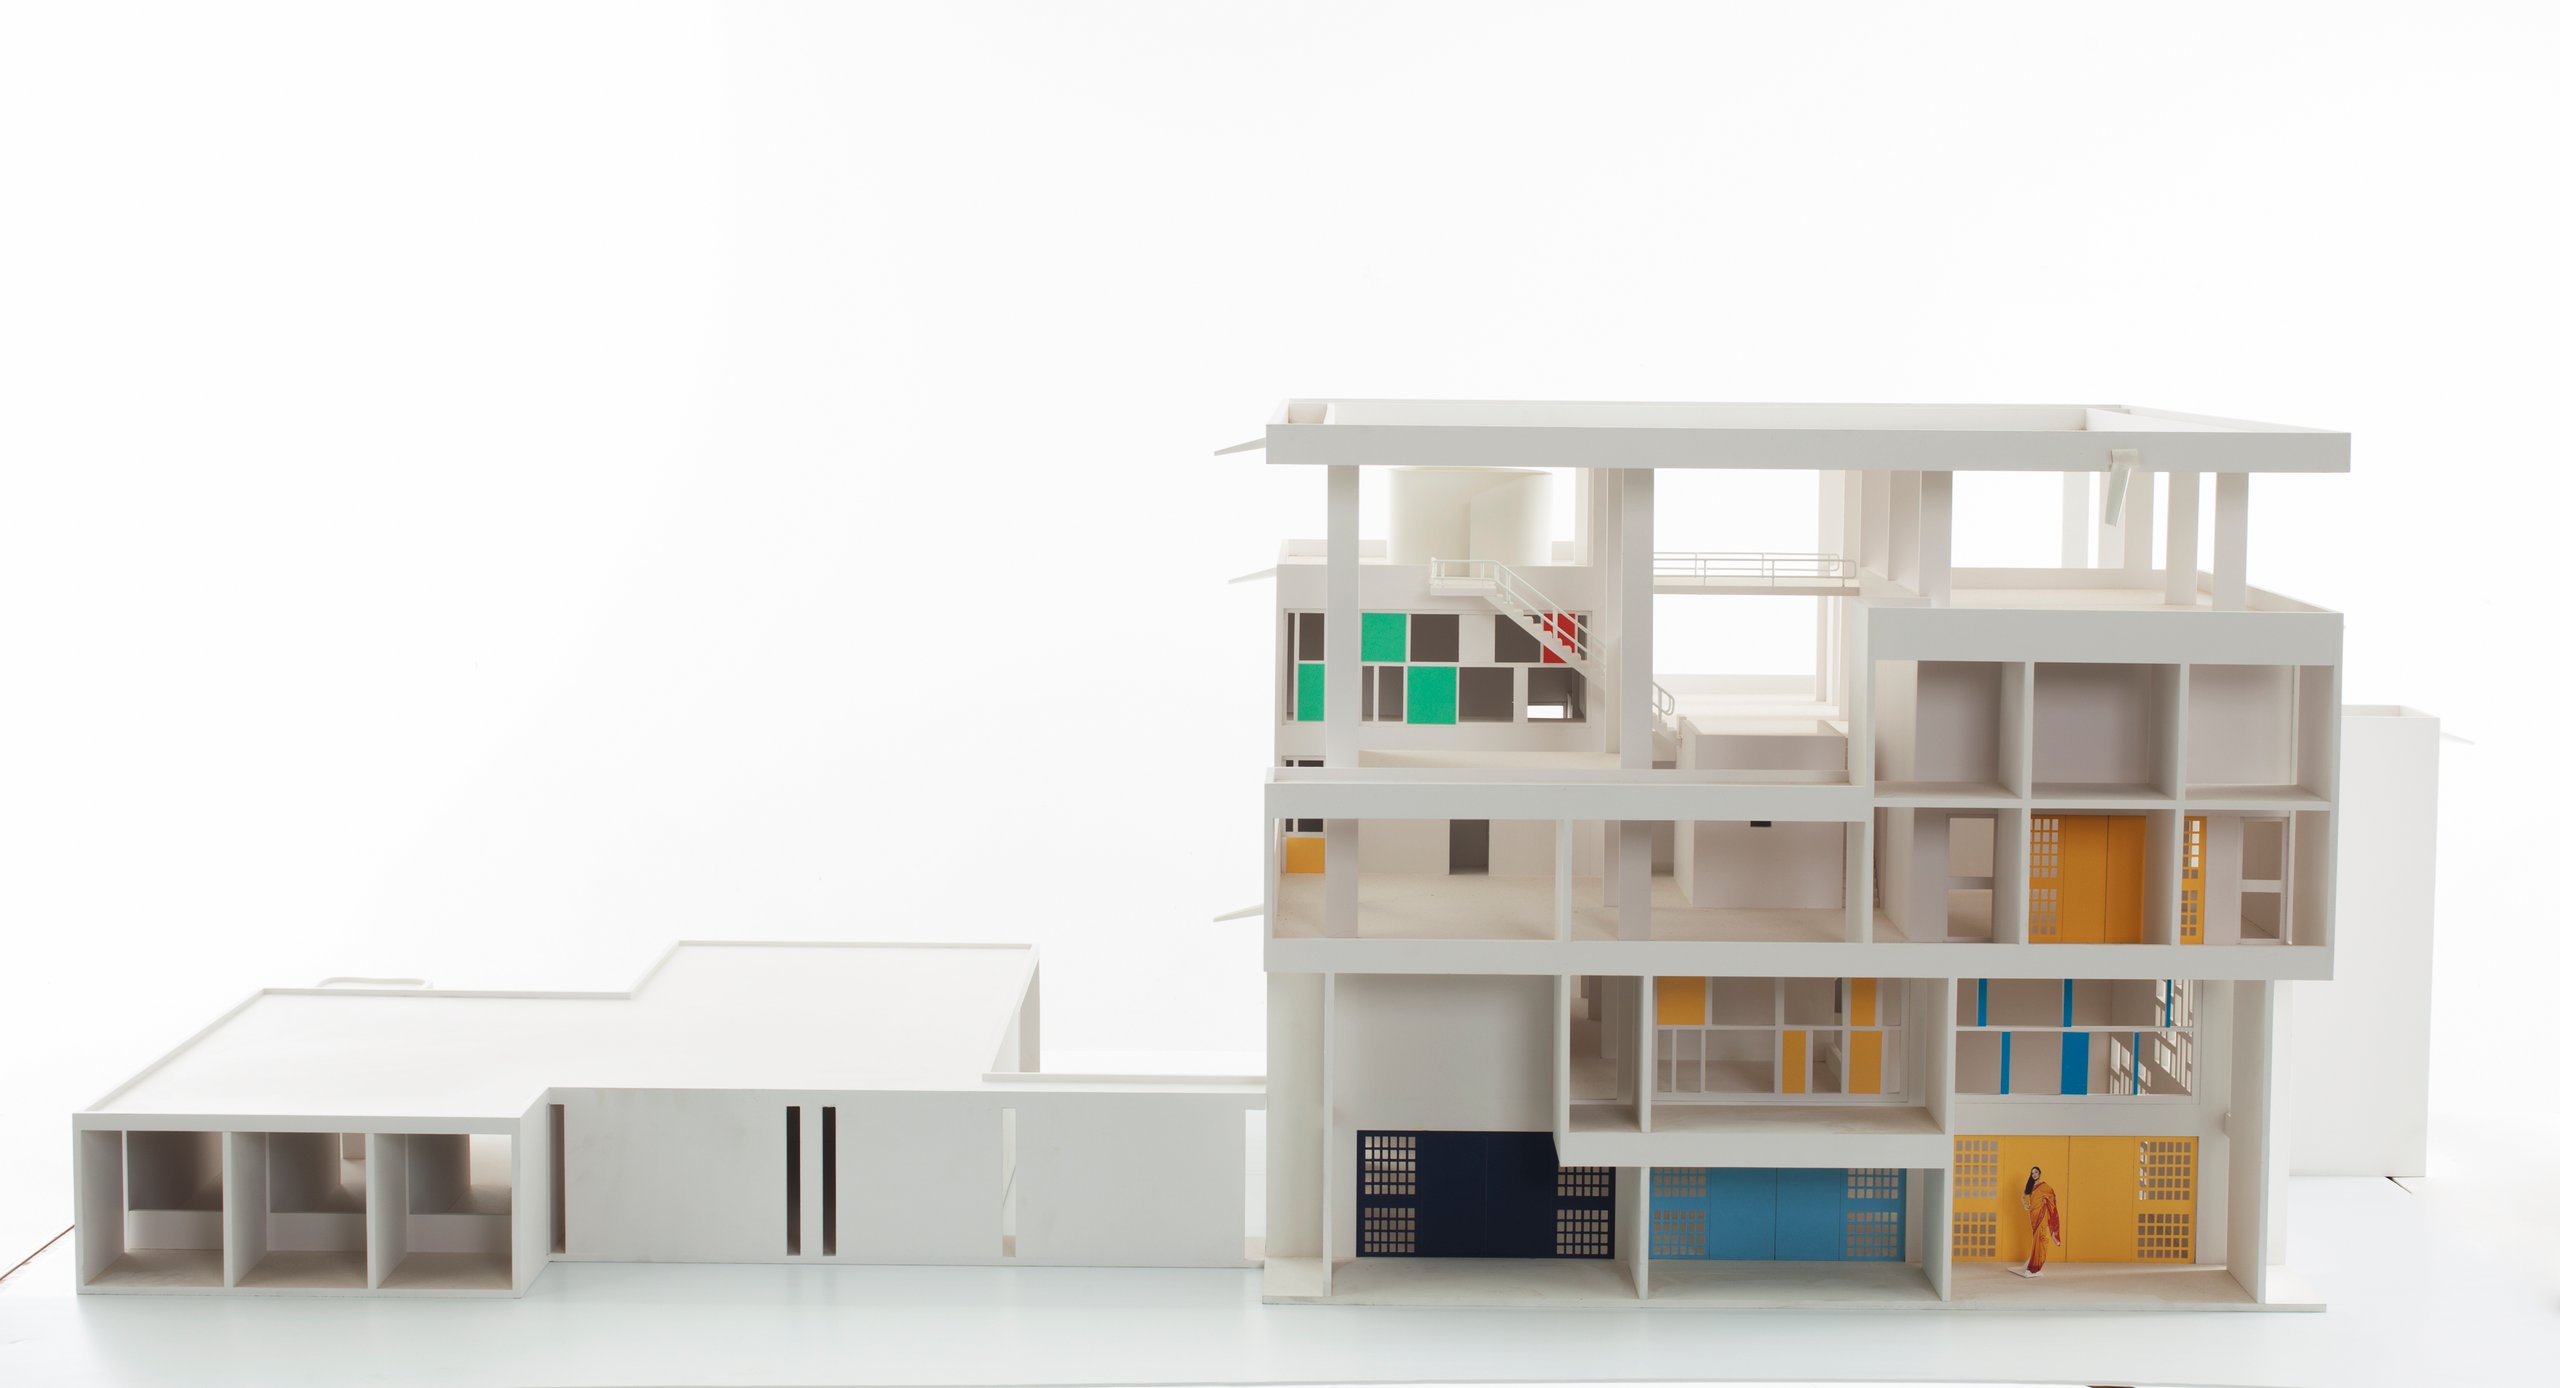 Model of Villa Shodhan designed by Le Corbusier